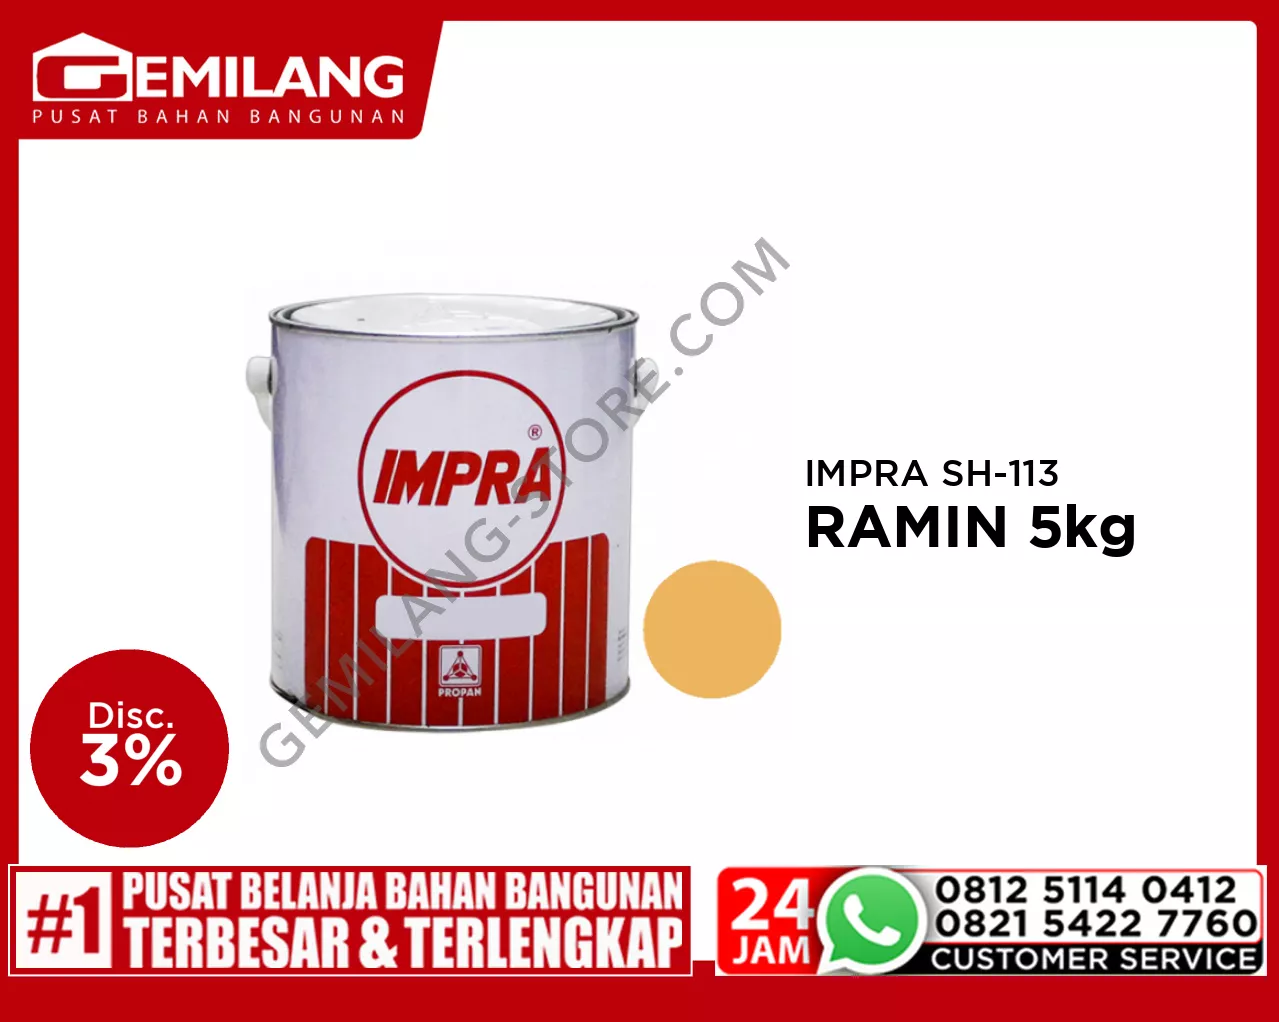 IMPRA SH-113 RAMIN 5kg